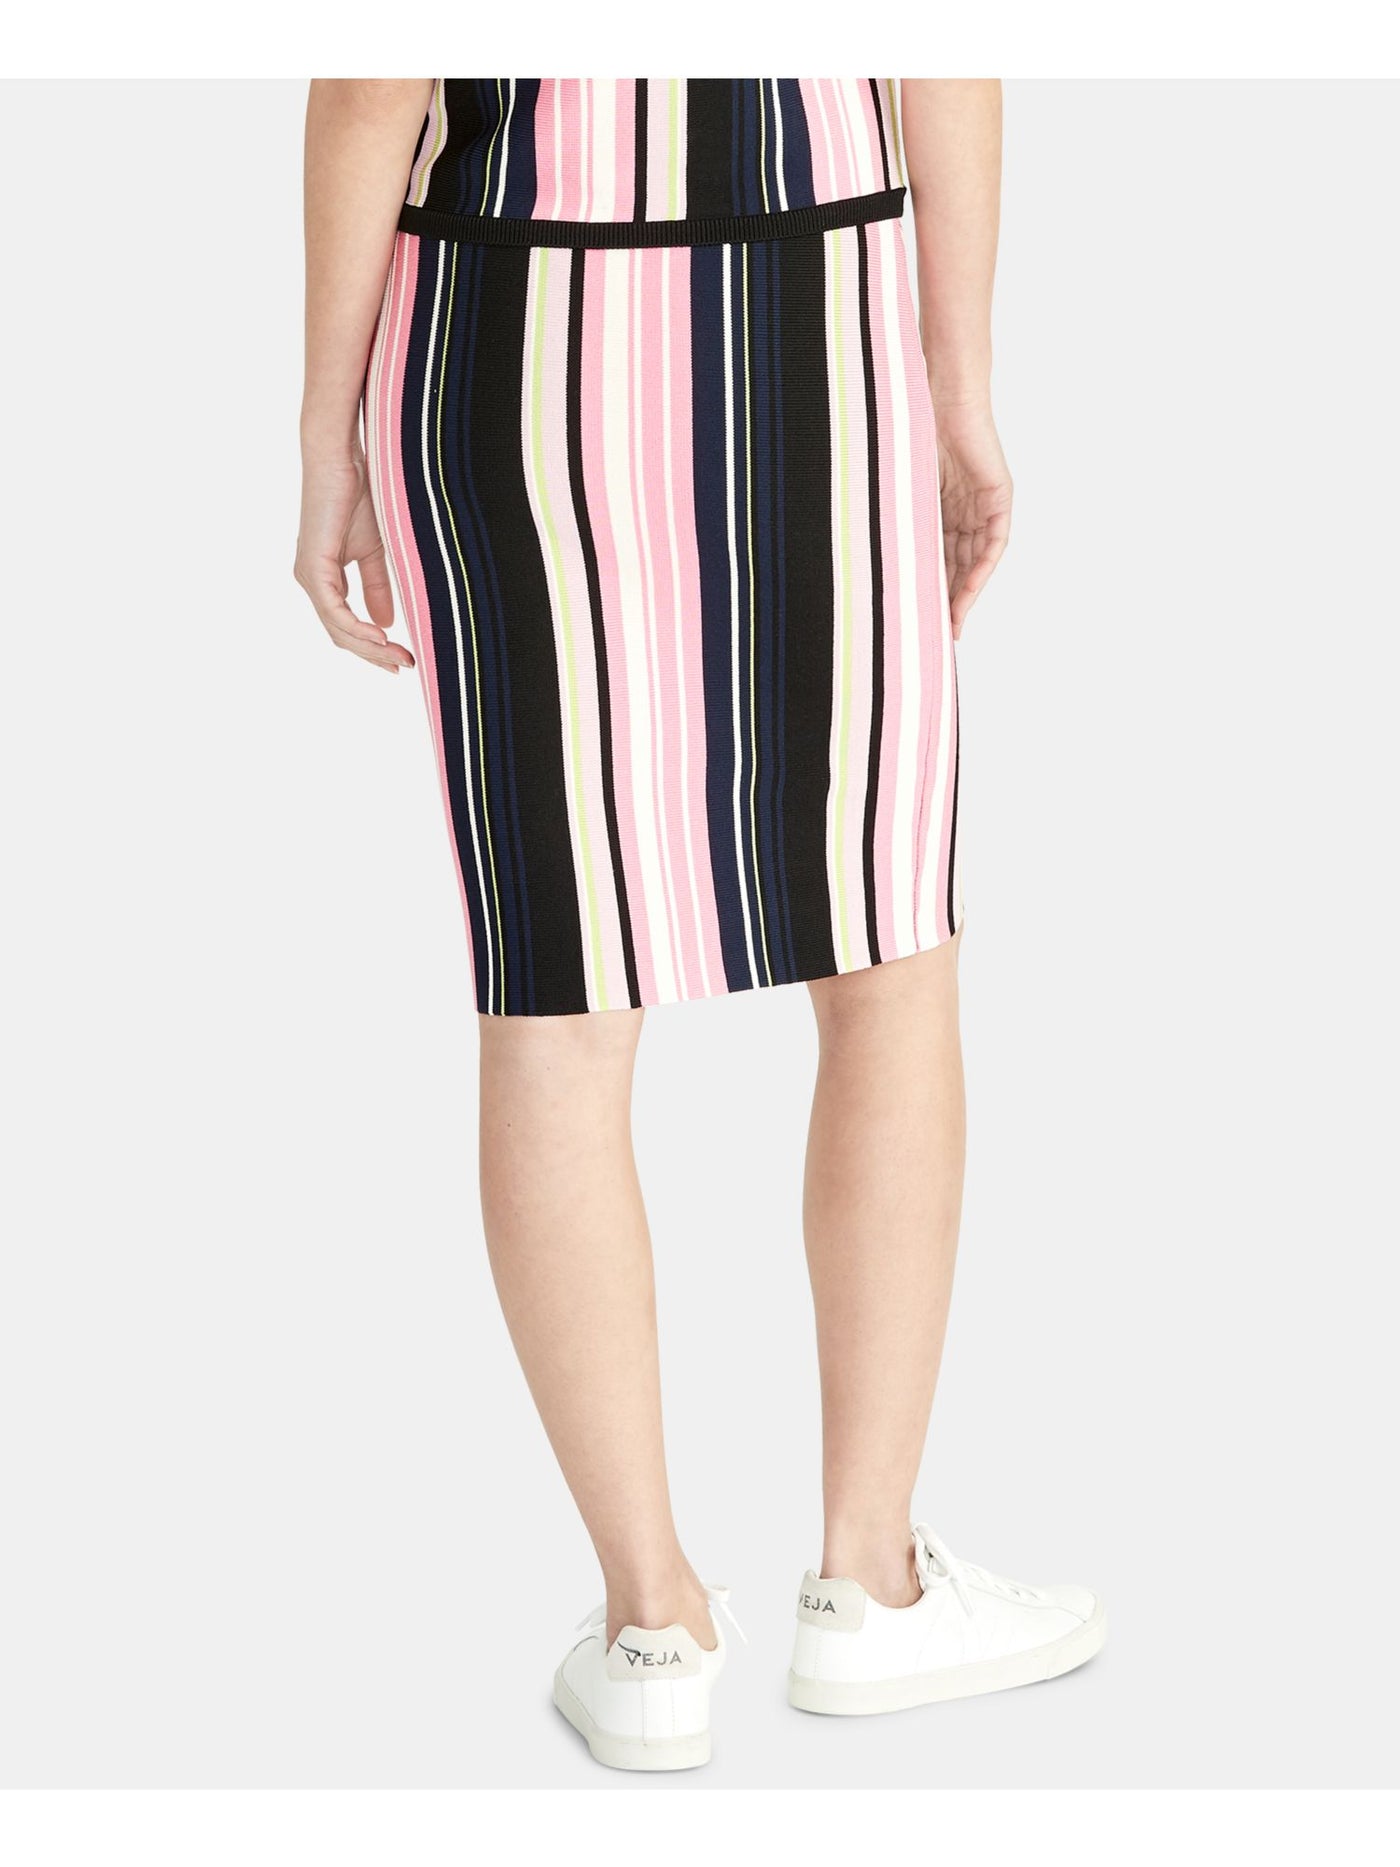 RACHEL ROY Womens Pink Striped Below The Knee Pencil Skirt XS